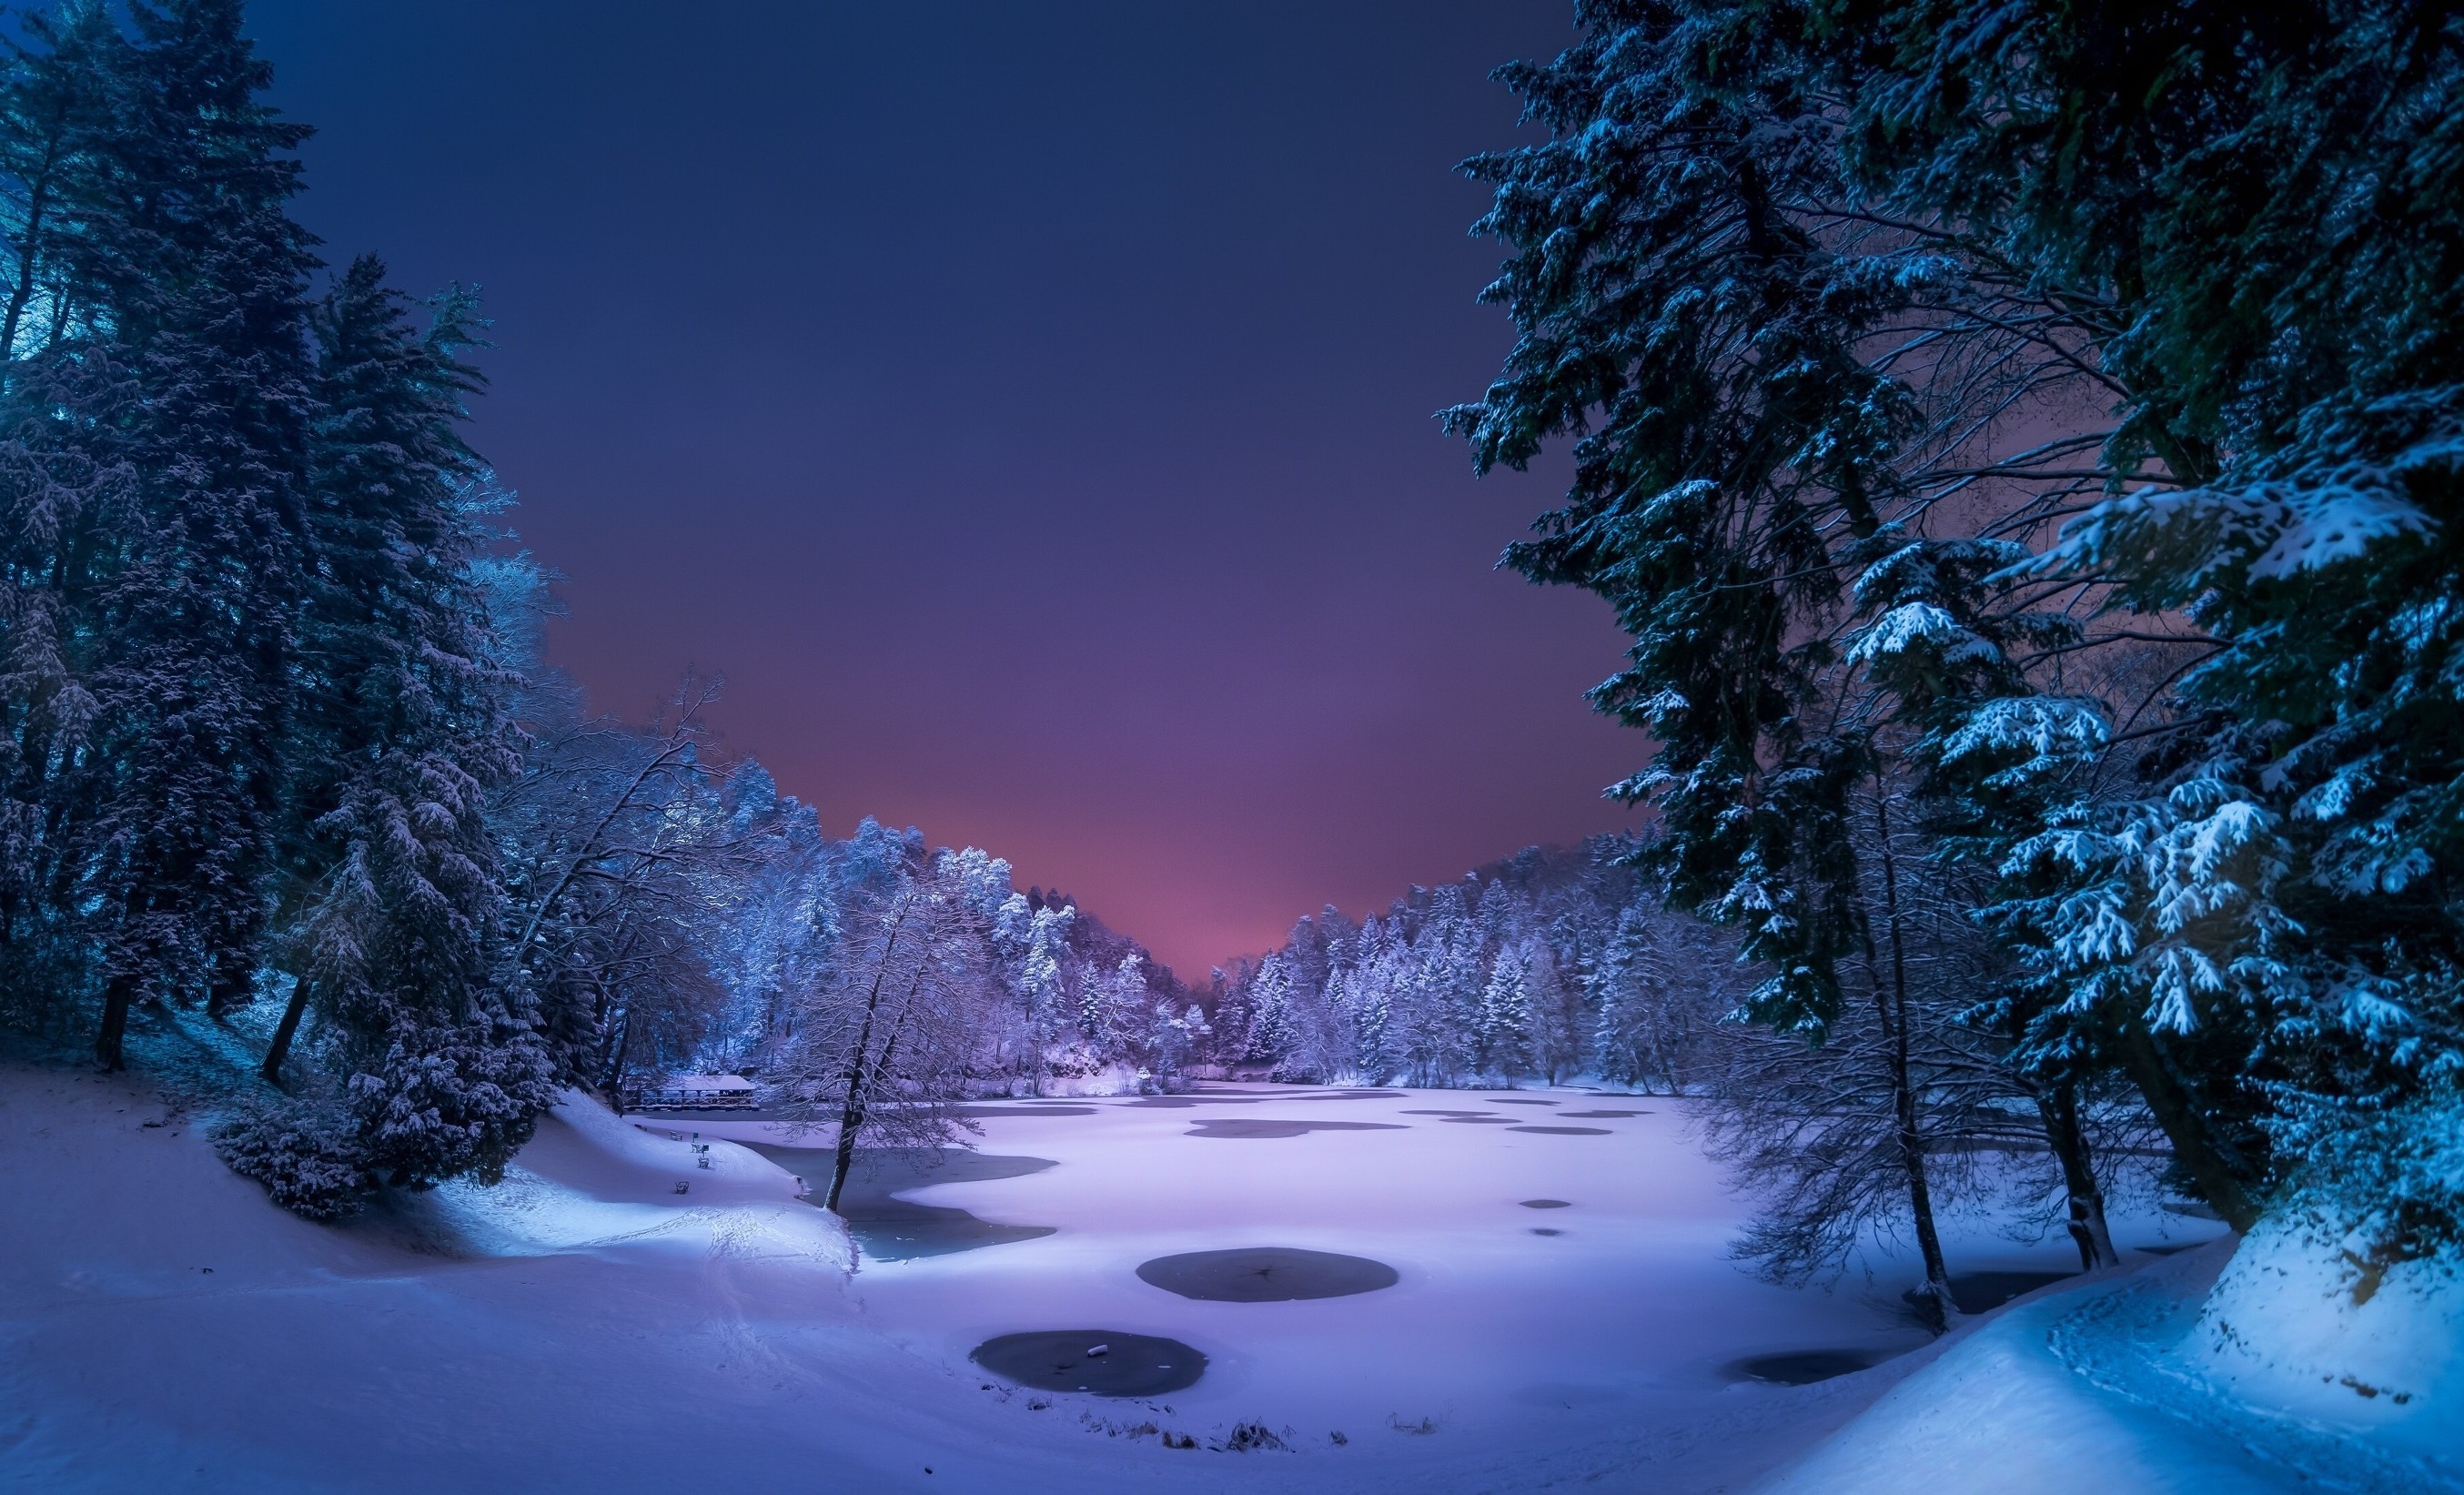 Night, Landscape, Snow, Ice, Winter, Trees, Nature